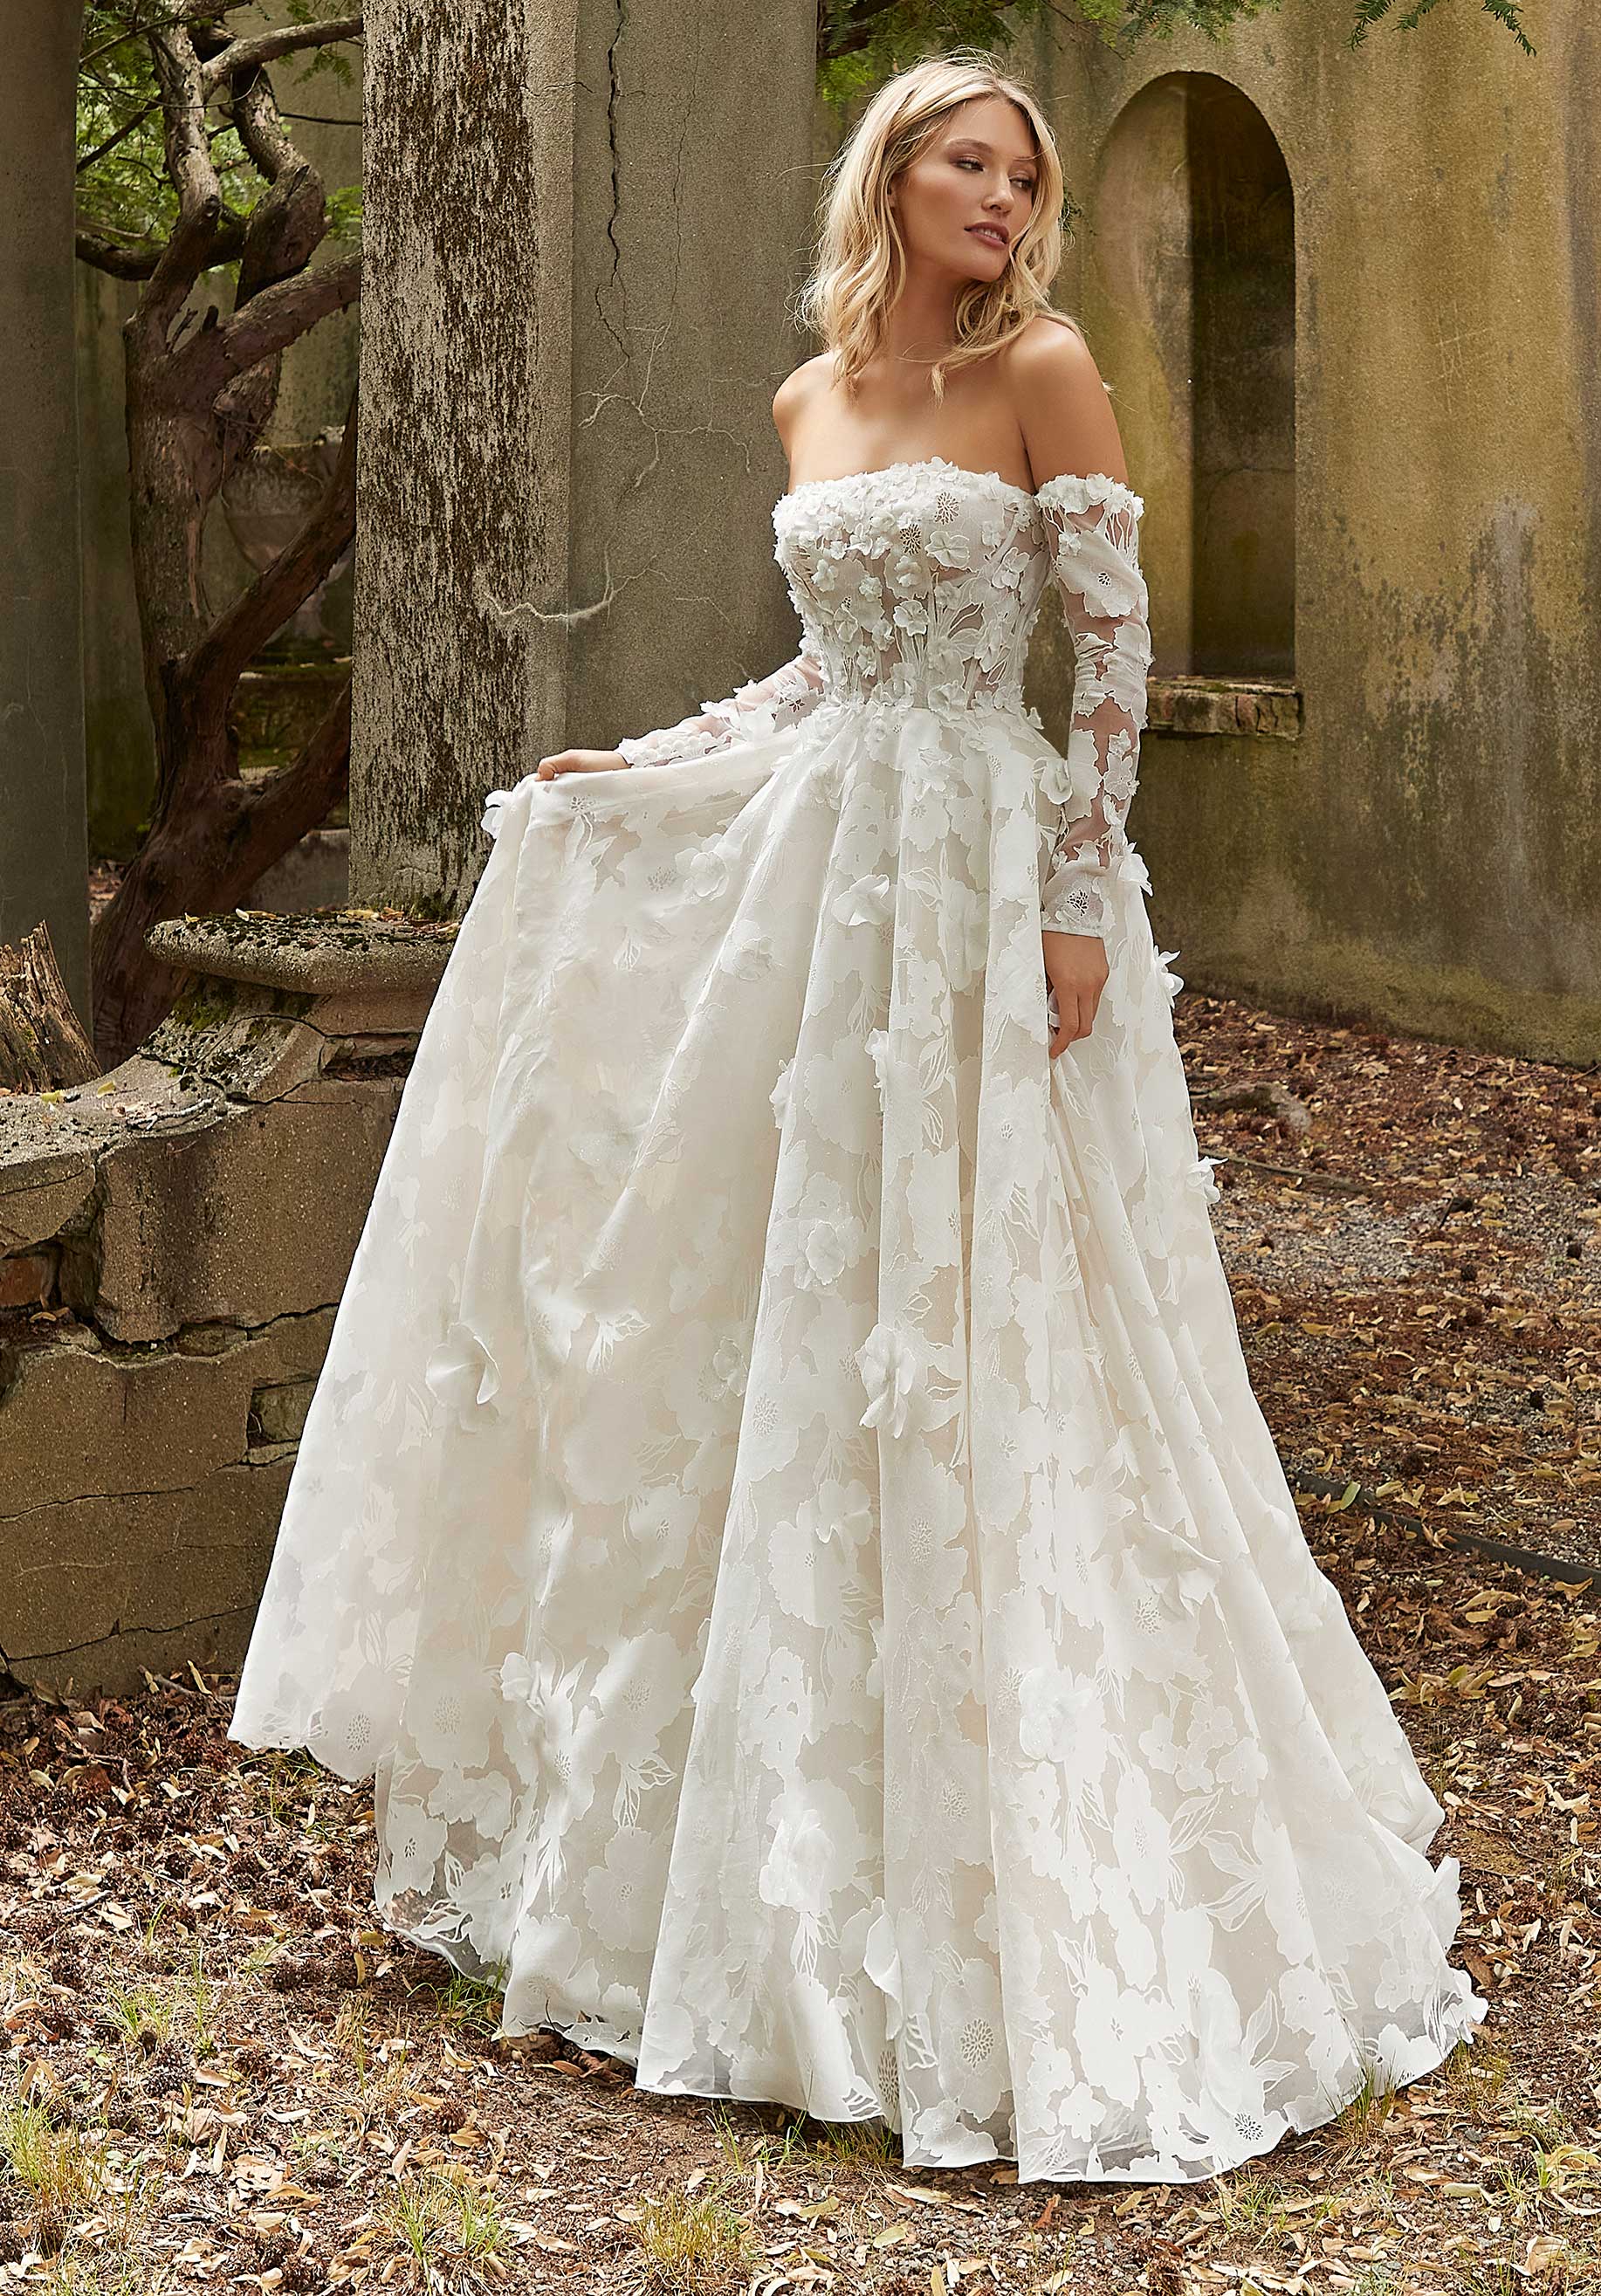 The Best Sparkling Lace Wedding Dress. Sparkly Flowy Wedding Dress. Not  Puffy Wedding Dress With Floral Patterns. European Wedding Dress -   Canada